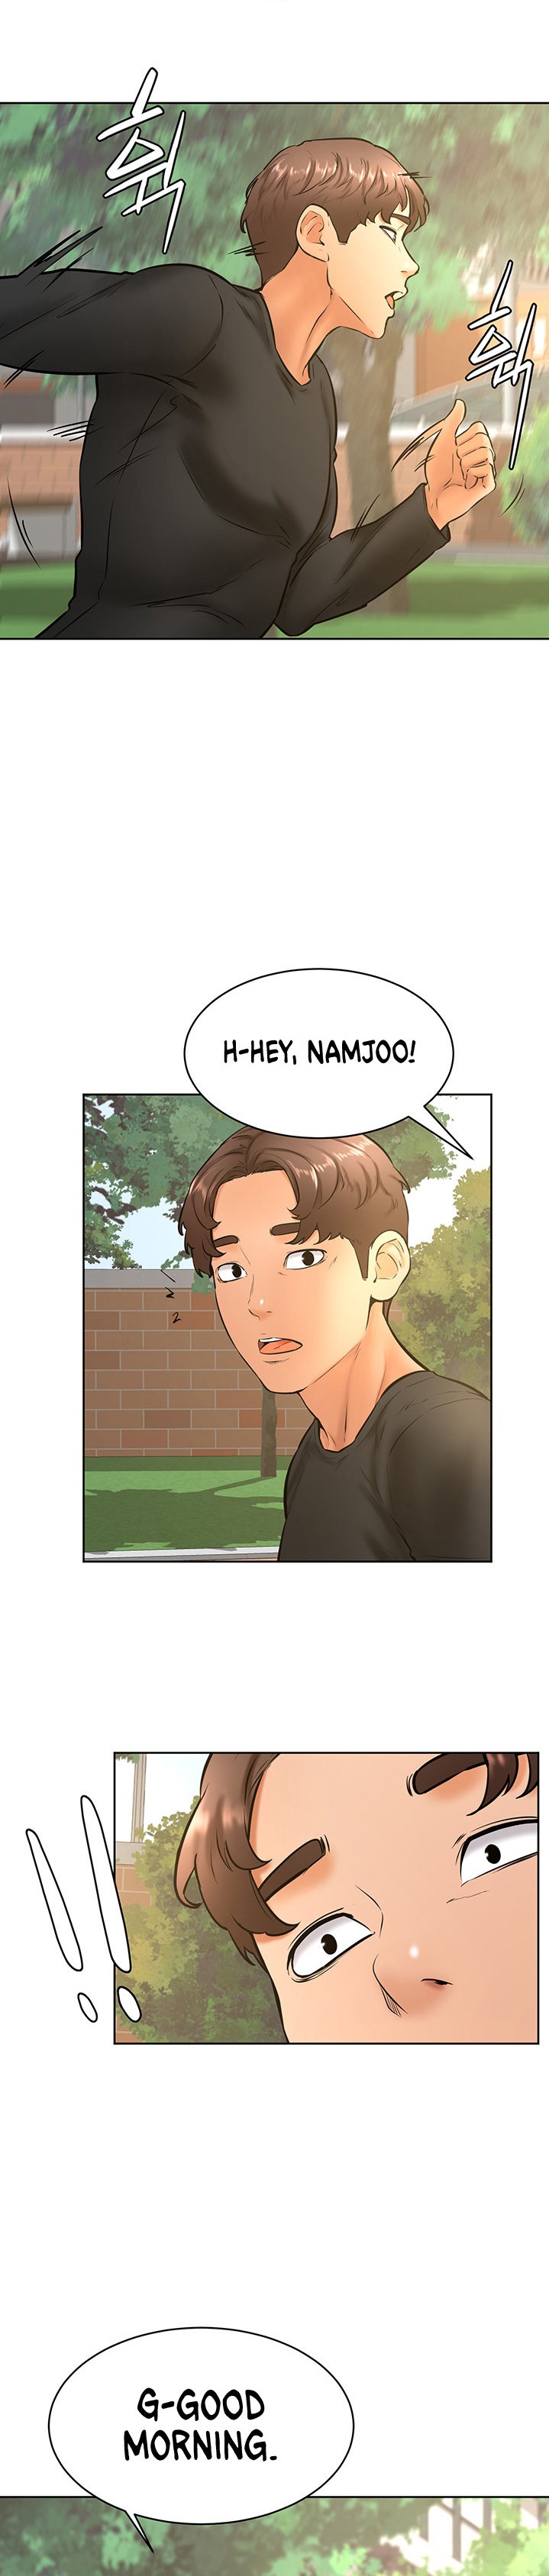 Cheer Up, Namjoo - Chapter 34 Page 19